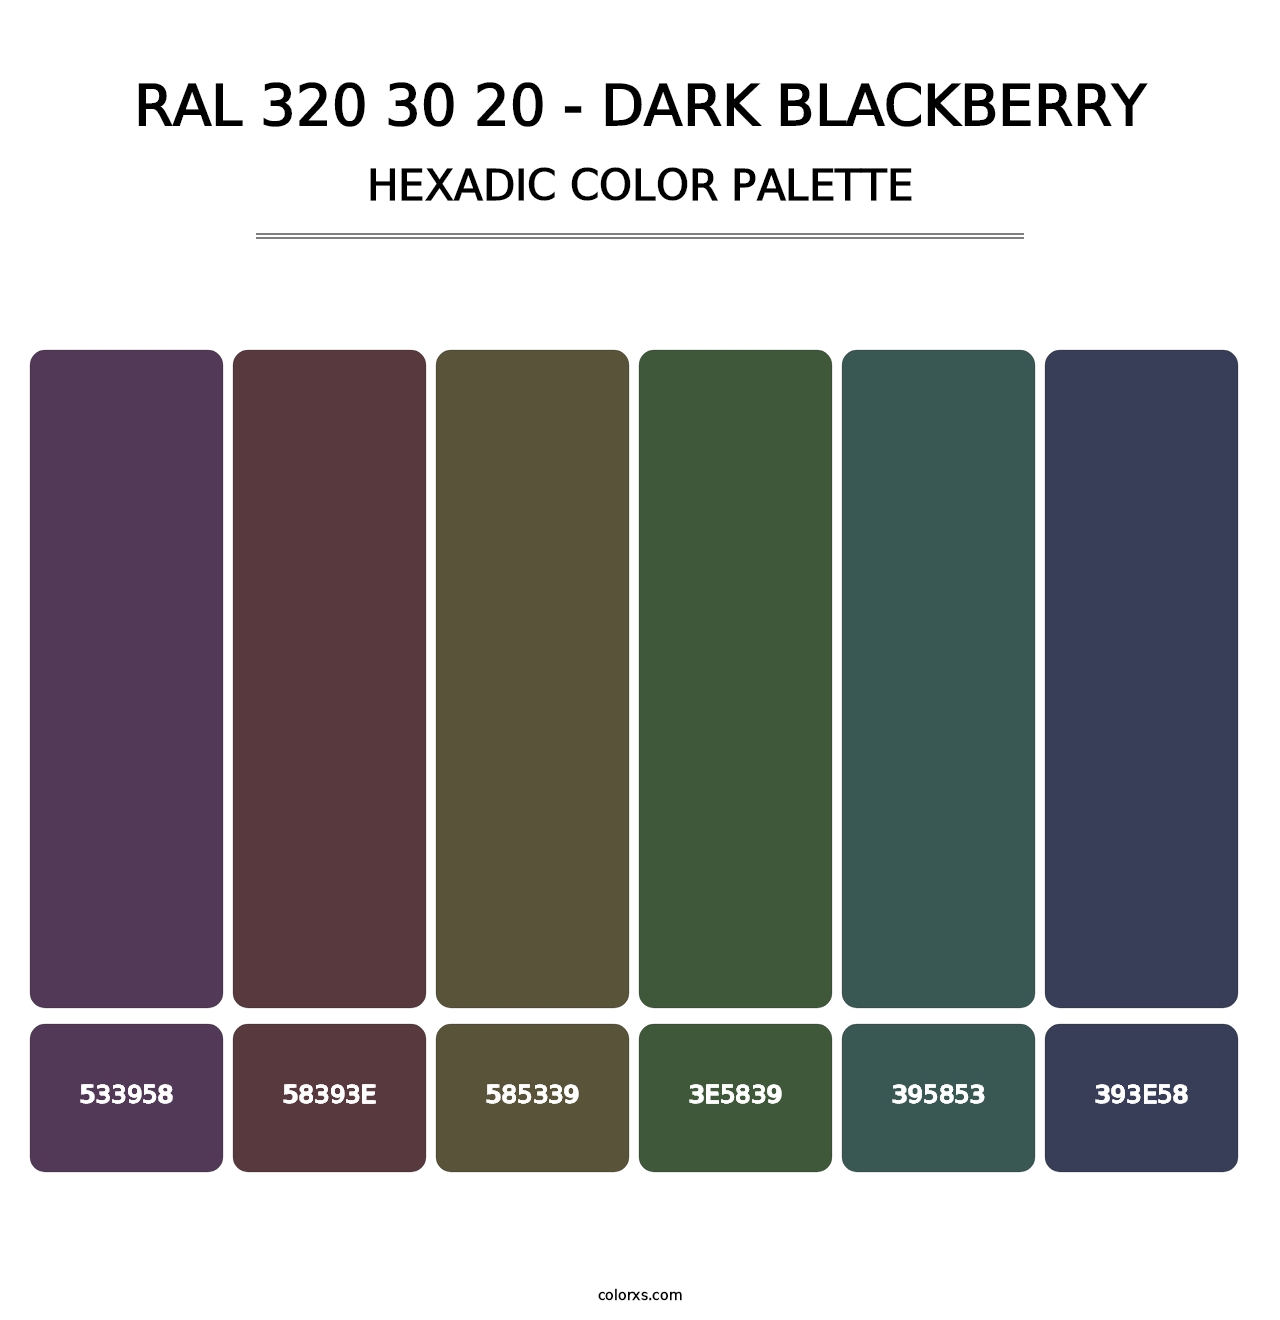 RAL 320 30 20 - Dark Blackberry - Hexadic Color Palette